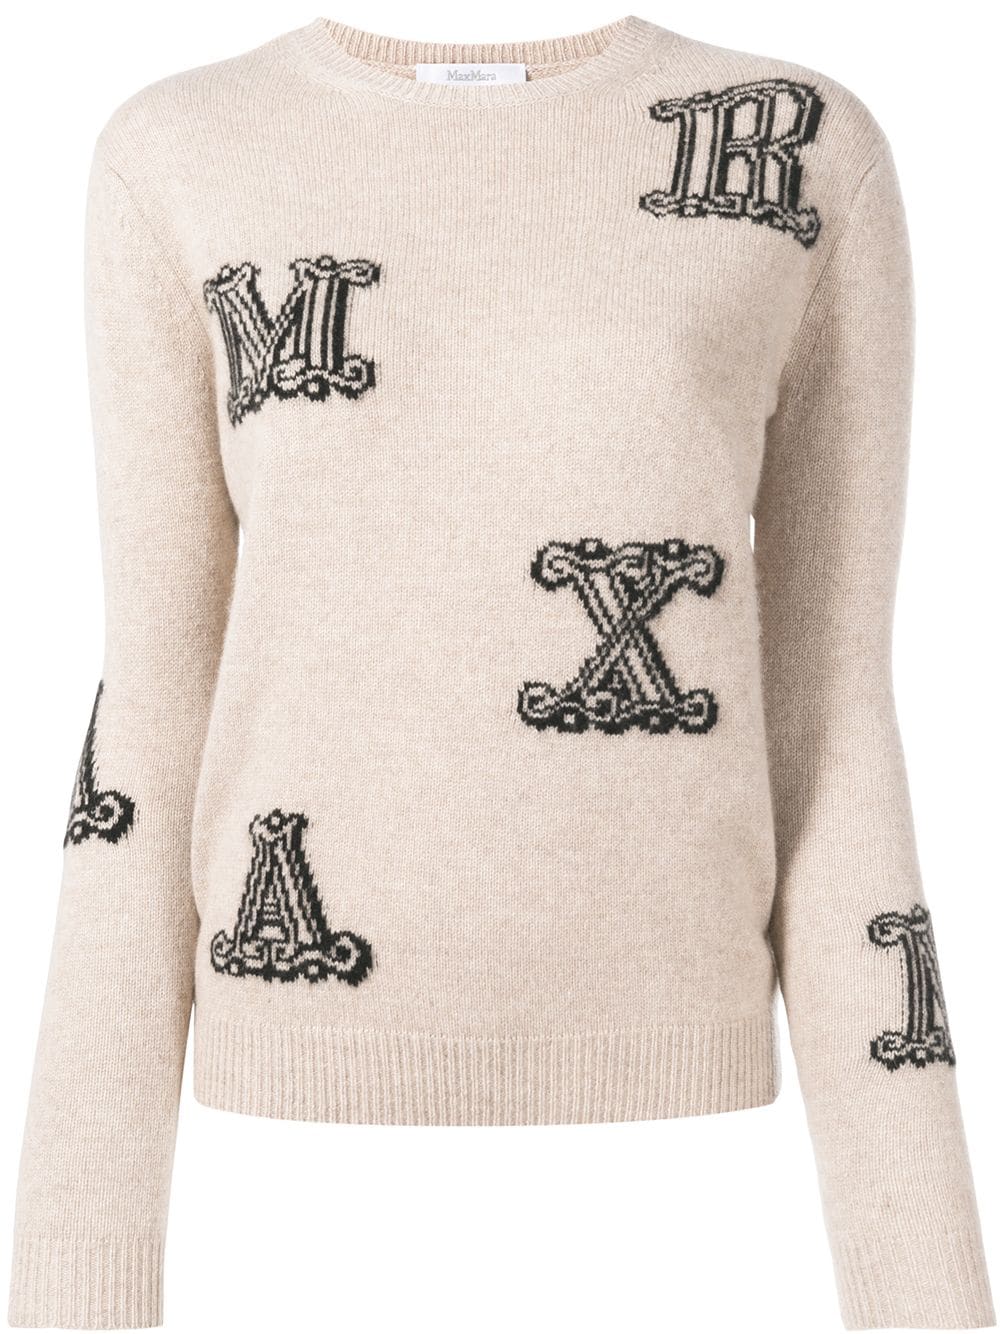 Max Mara Logo - Max Mara Logo Embroidered Sweater - Neutrals | ModeSens